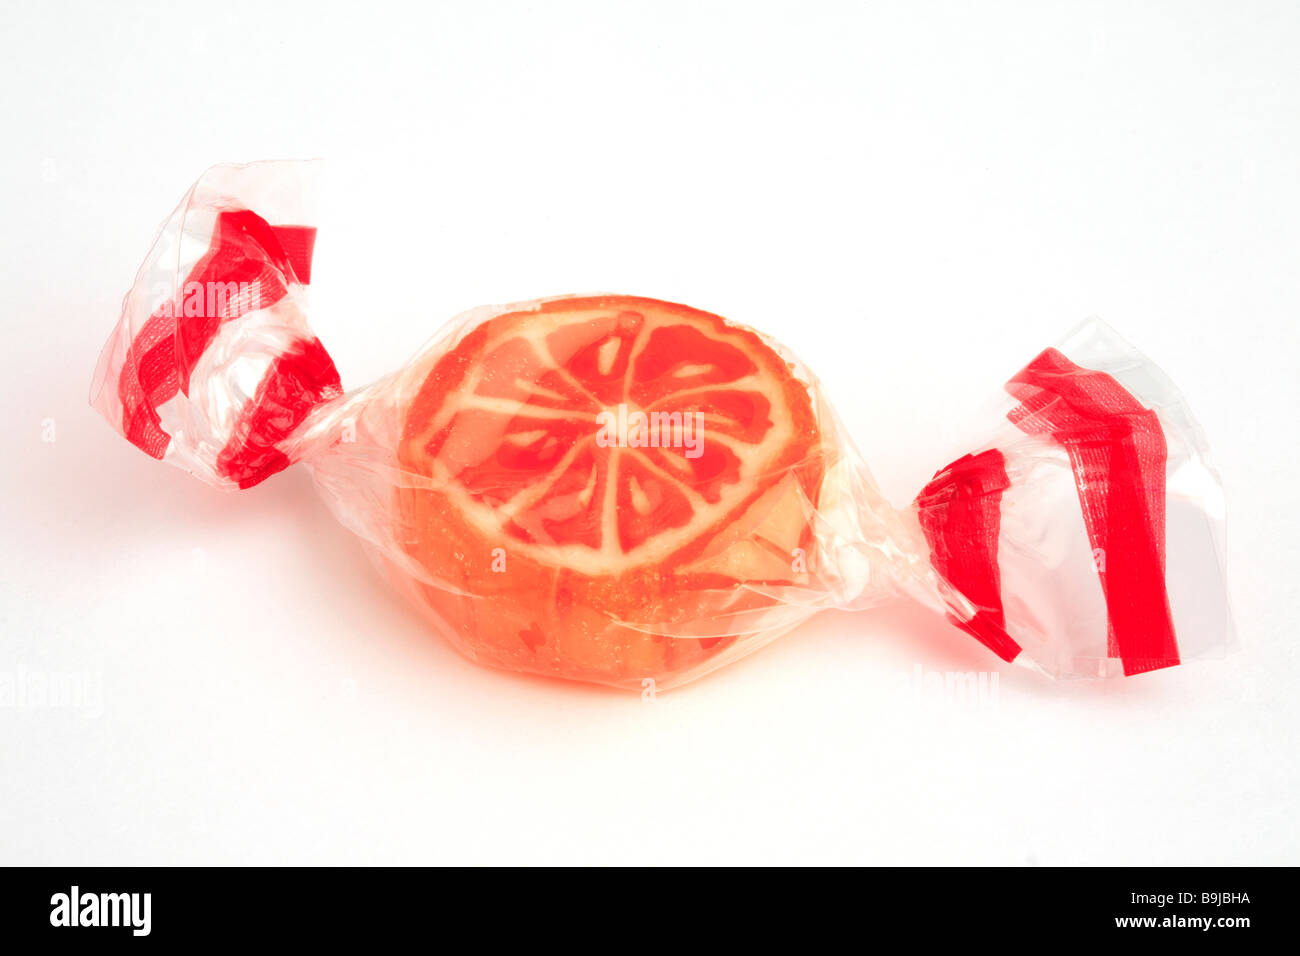 a single fruit candy Stock Photo